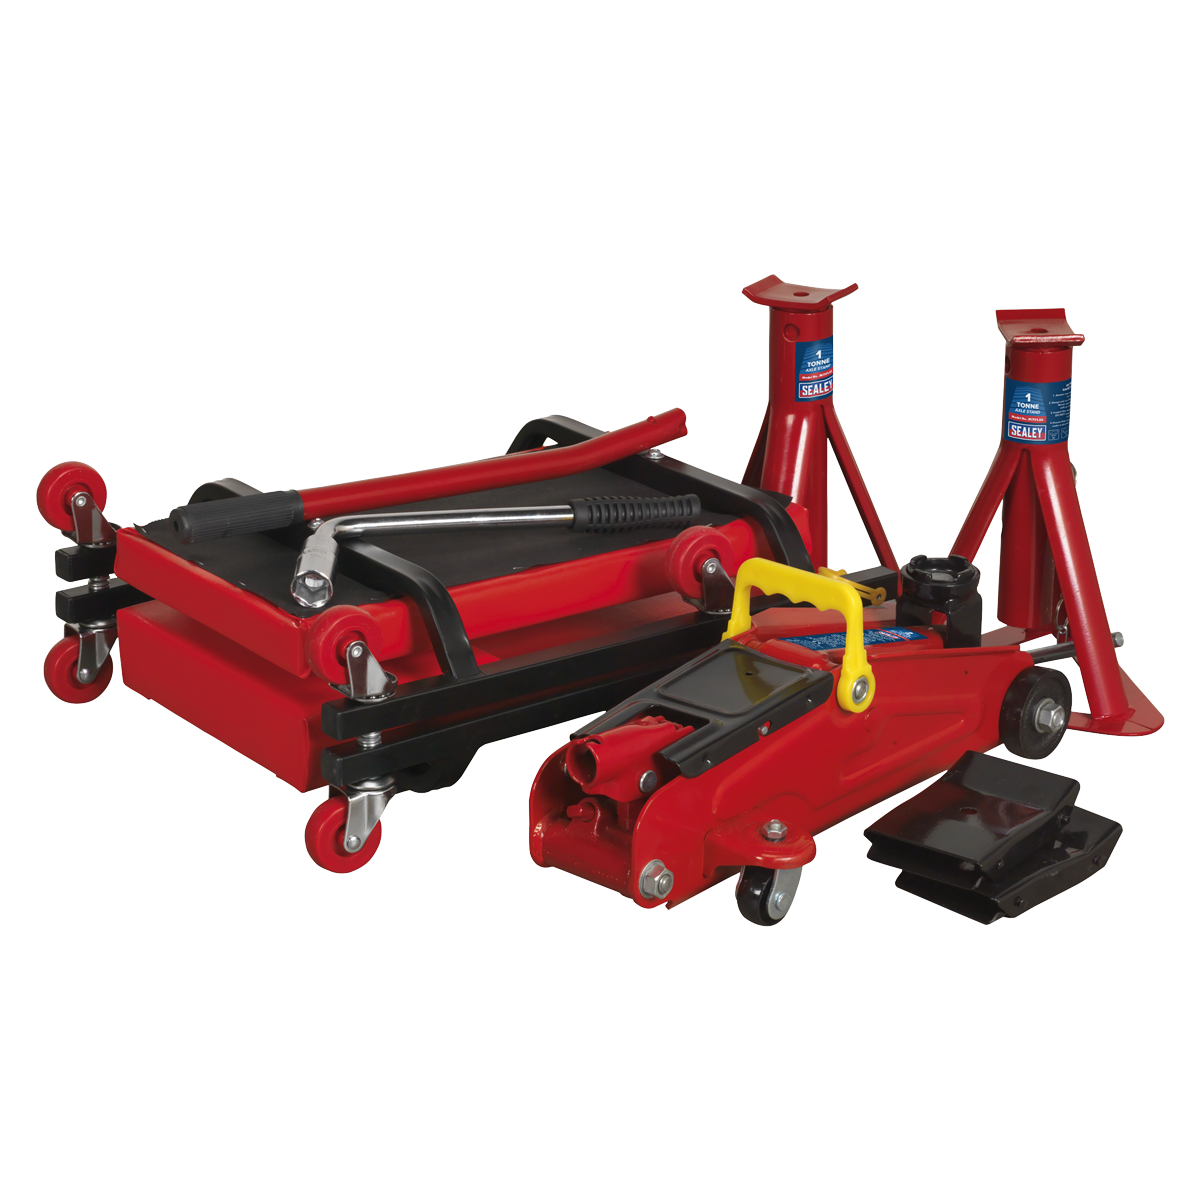 Sealey mechanics garage lifting kit ( trolley jack, axle stands, creeper) JKIT01